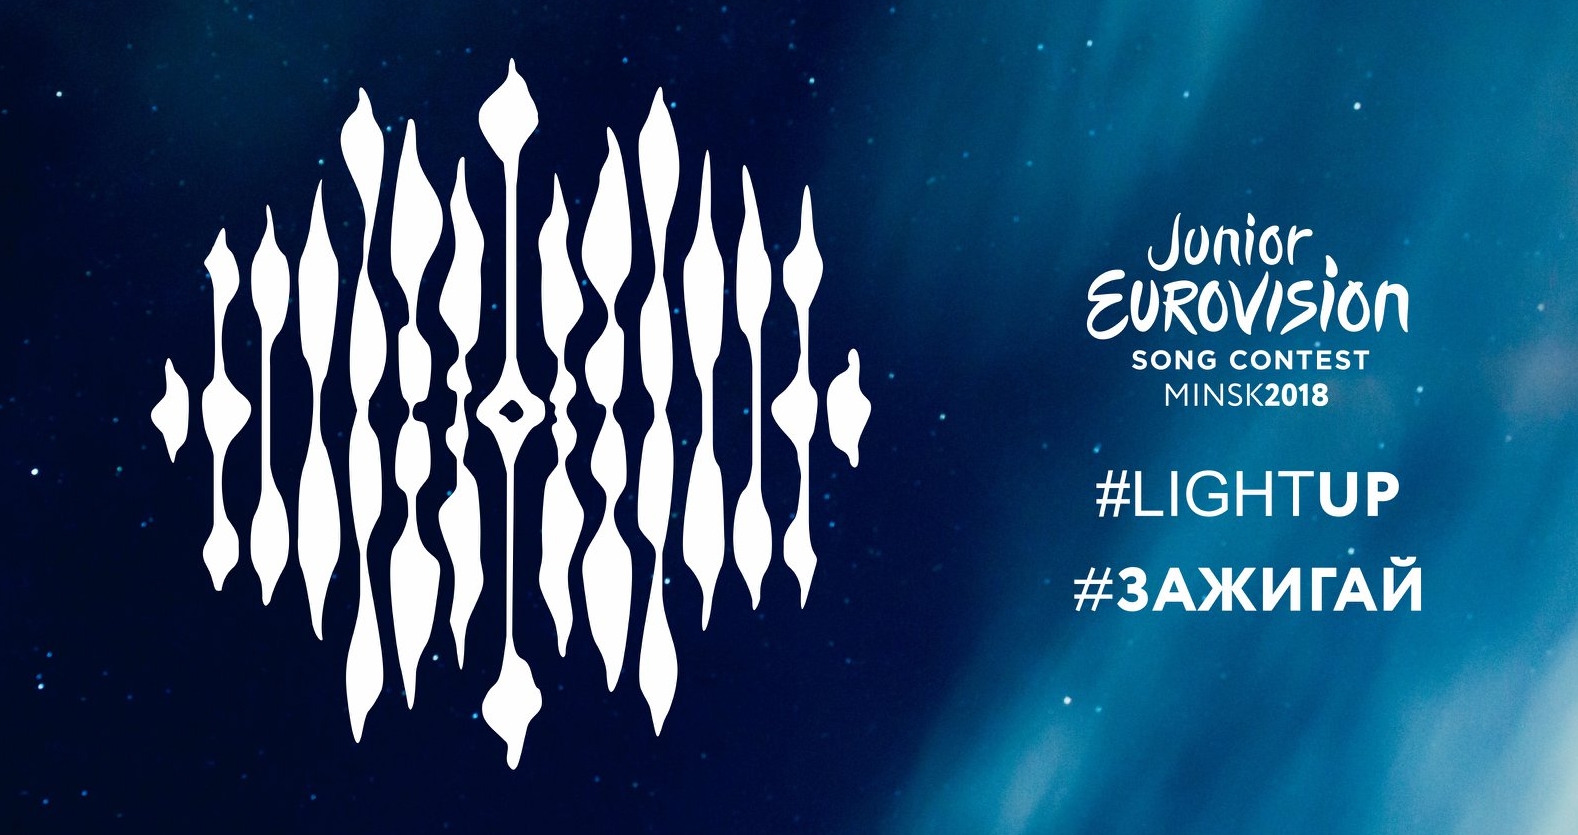 #LightUp! EBU unveils Junior Eurovision 2018 logo and slogan